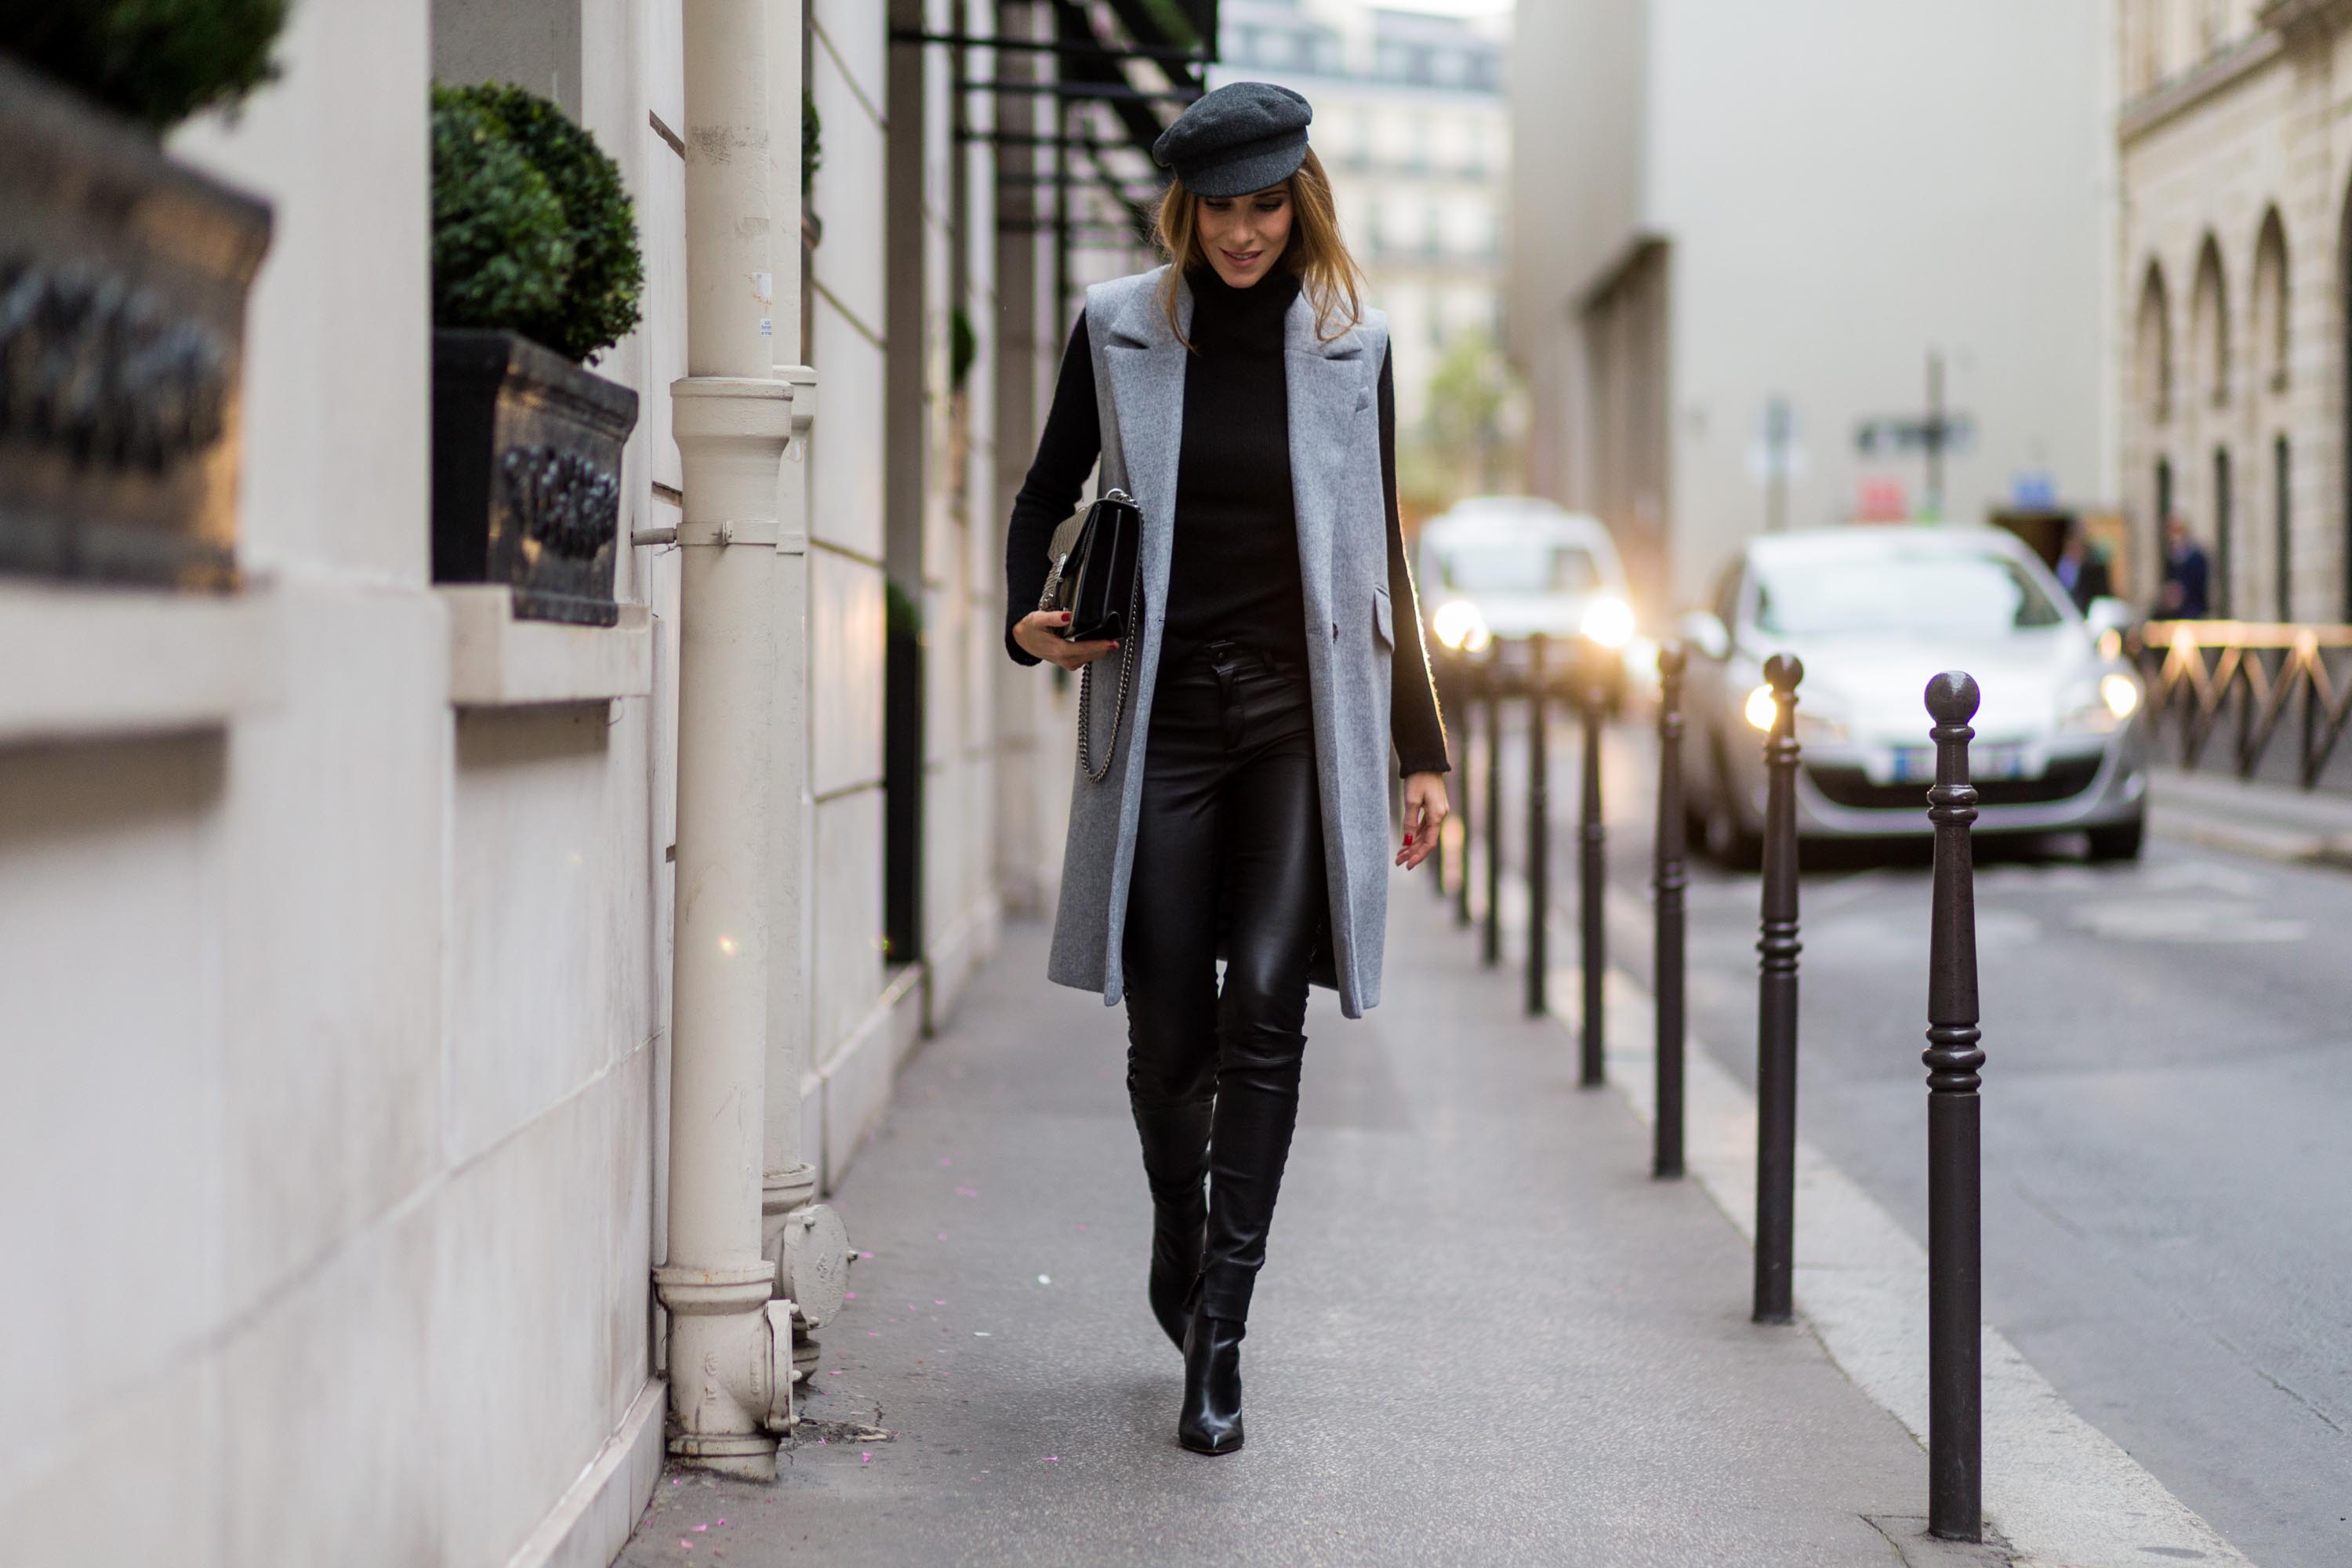 Alexandra Lapp at Paris Fashion Week #2